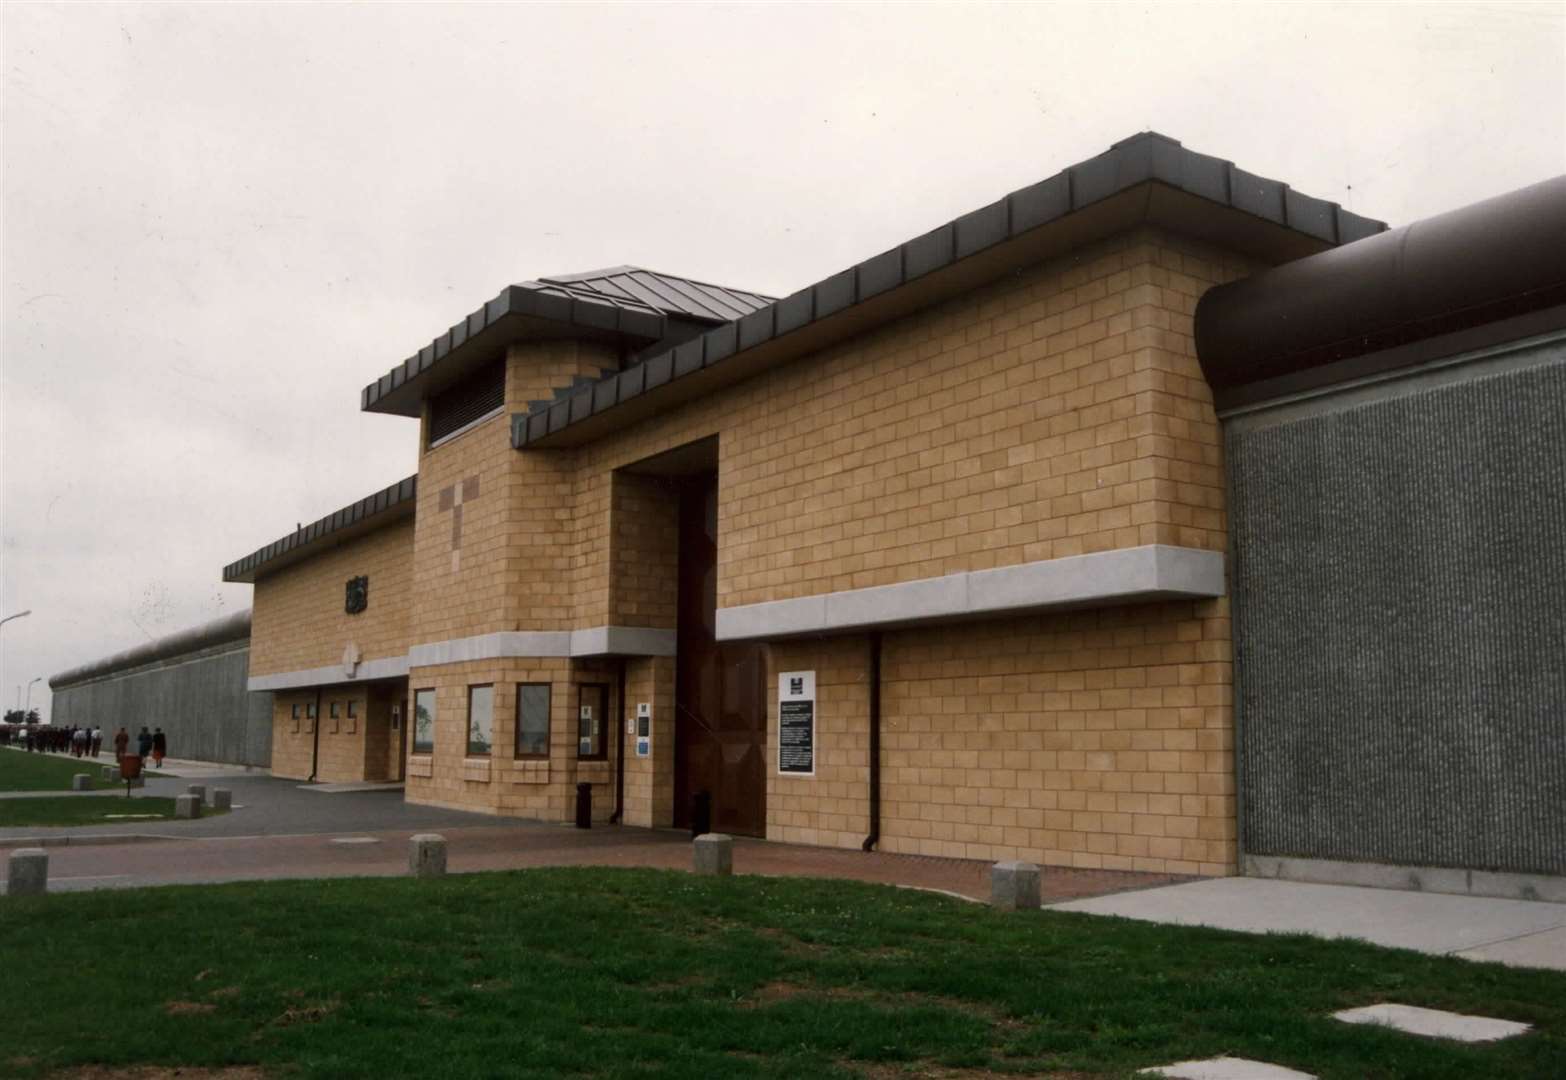 Elmley Prison